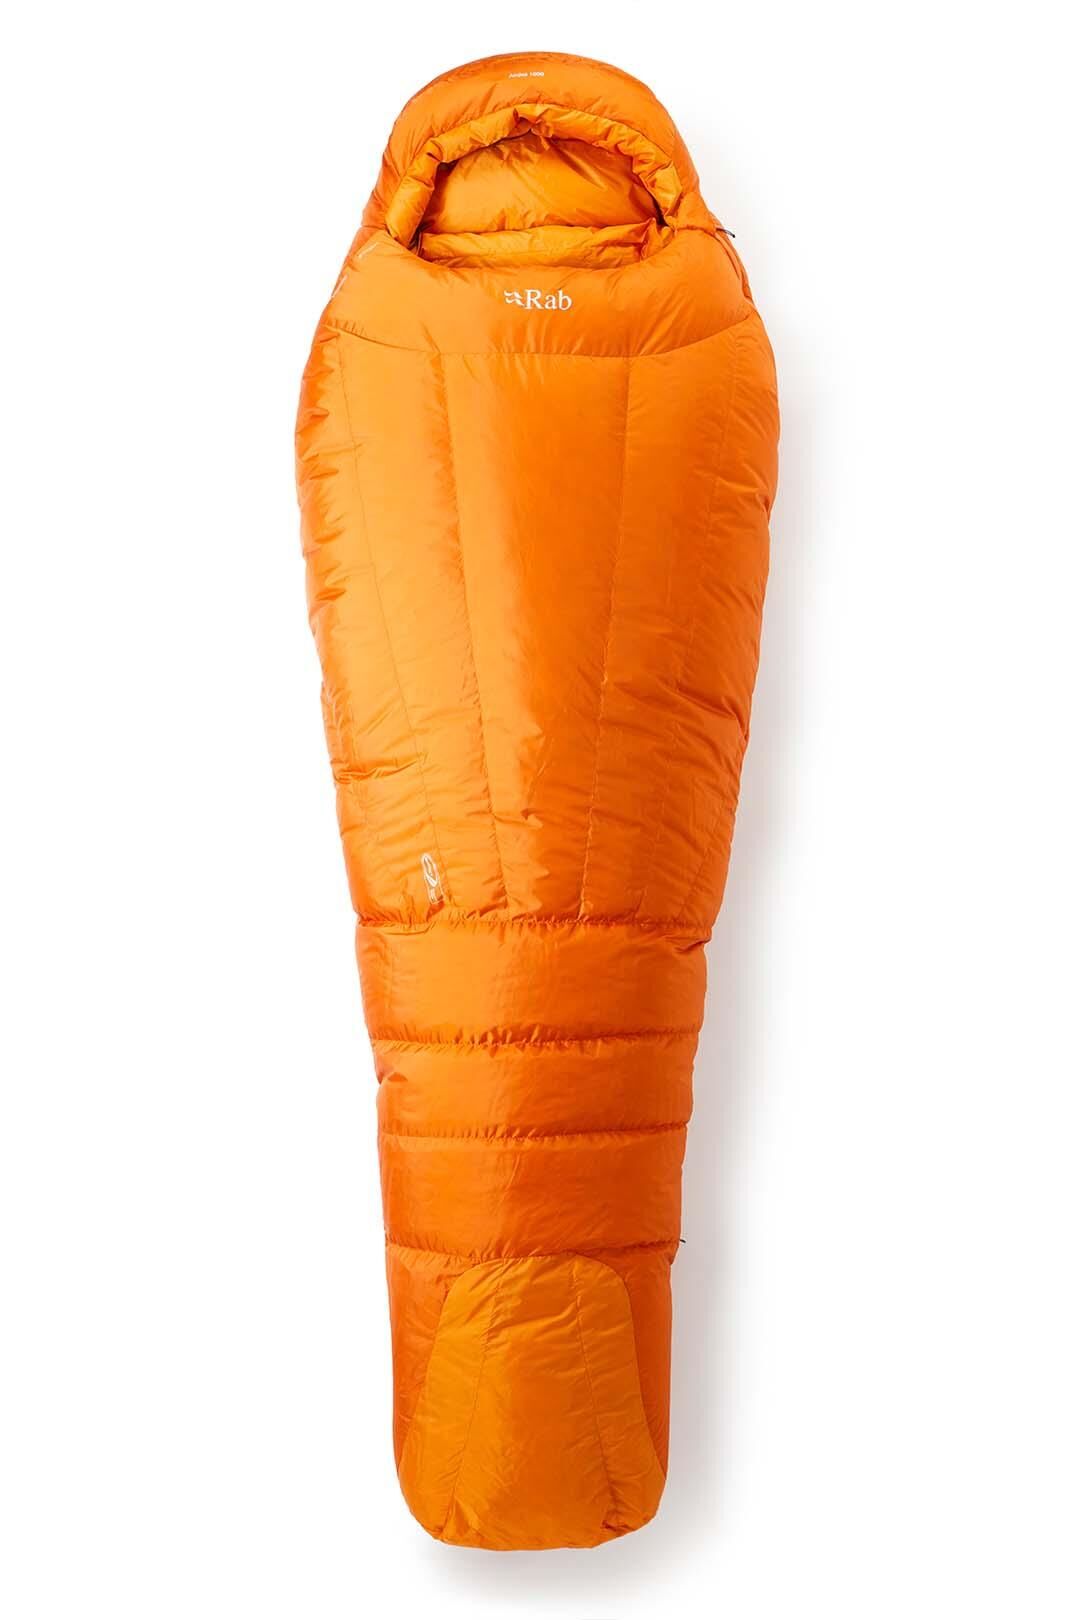 Rab - Andes 1000 - Down sleeping bag